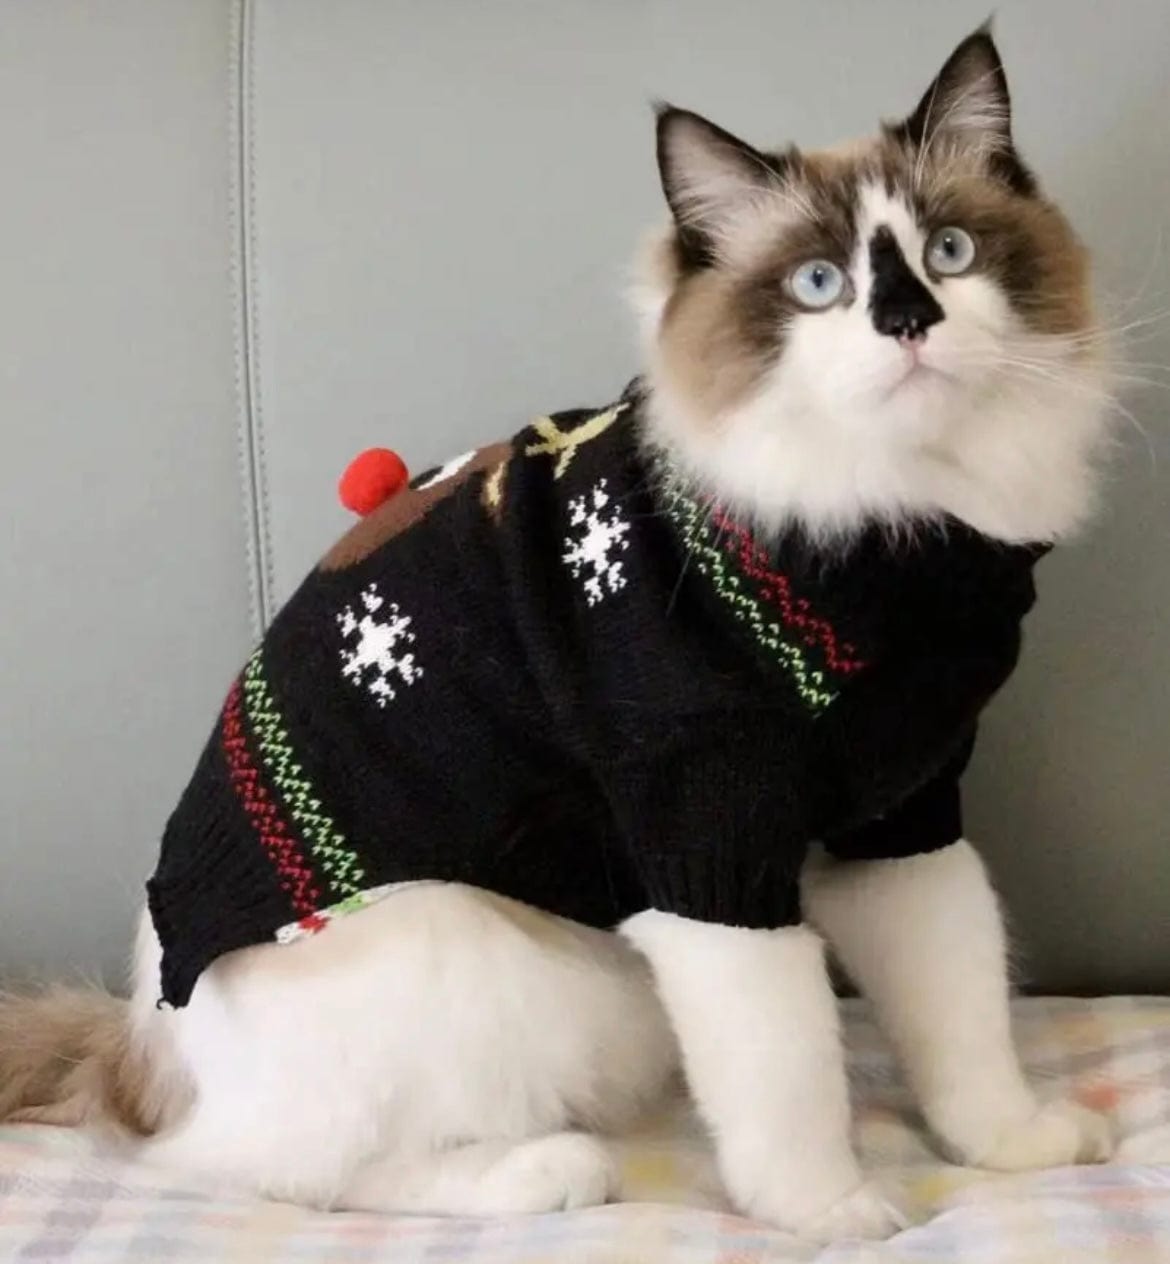 KUTKUT Dog Christmas Sweater Soft Warm Fall Winter Turtleneck Knitted Puppy Clothes Cute Reindeer Black Xmas Short Sleeves Clothing for Small Medium Dogs Cat - kutkutstyle